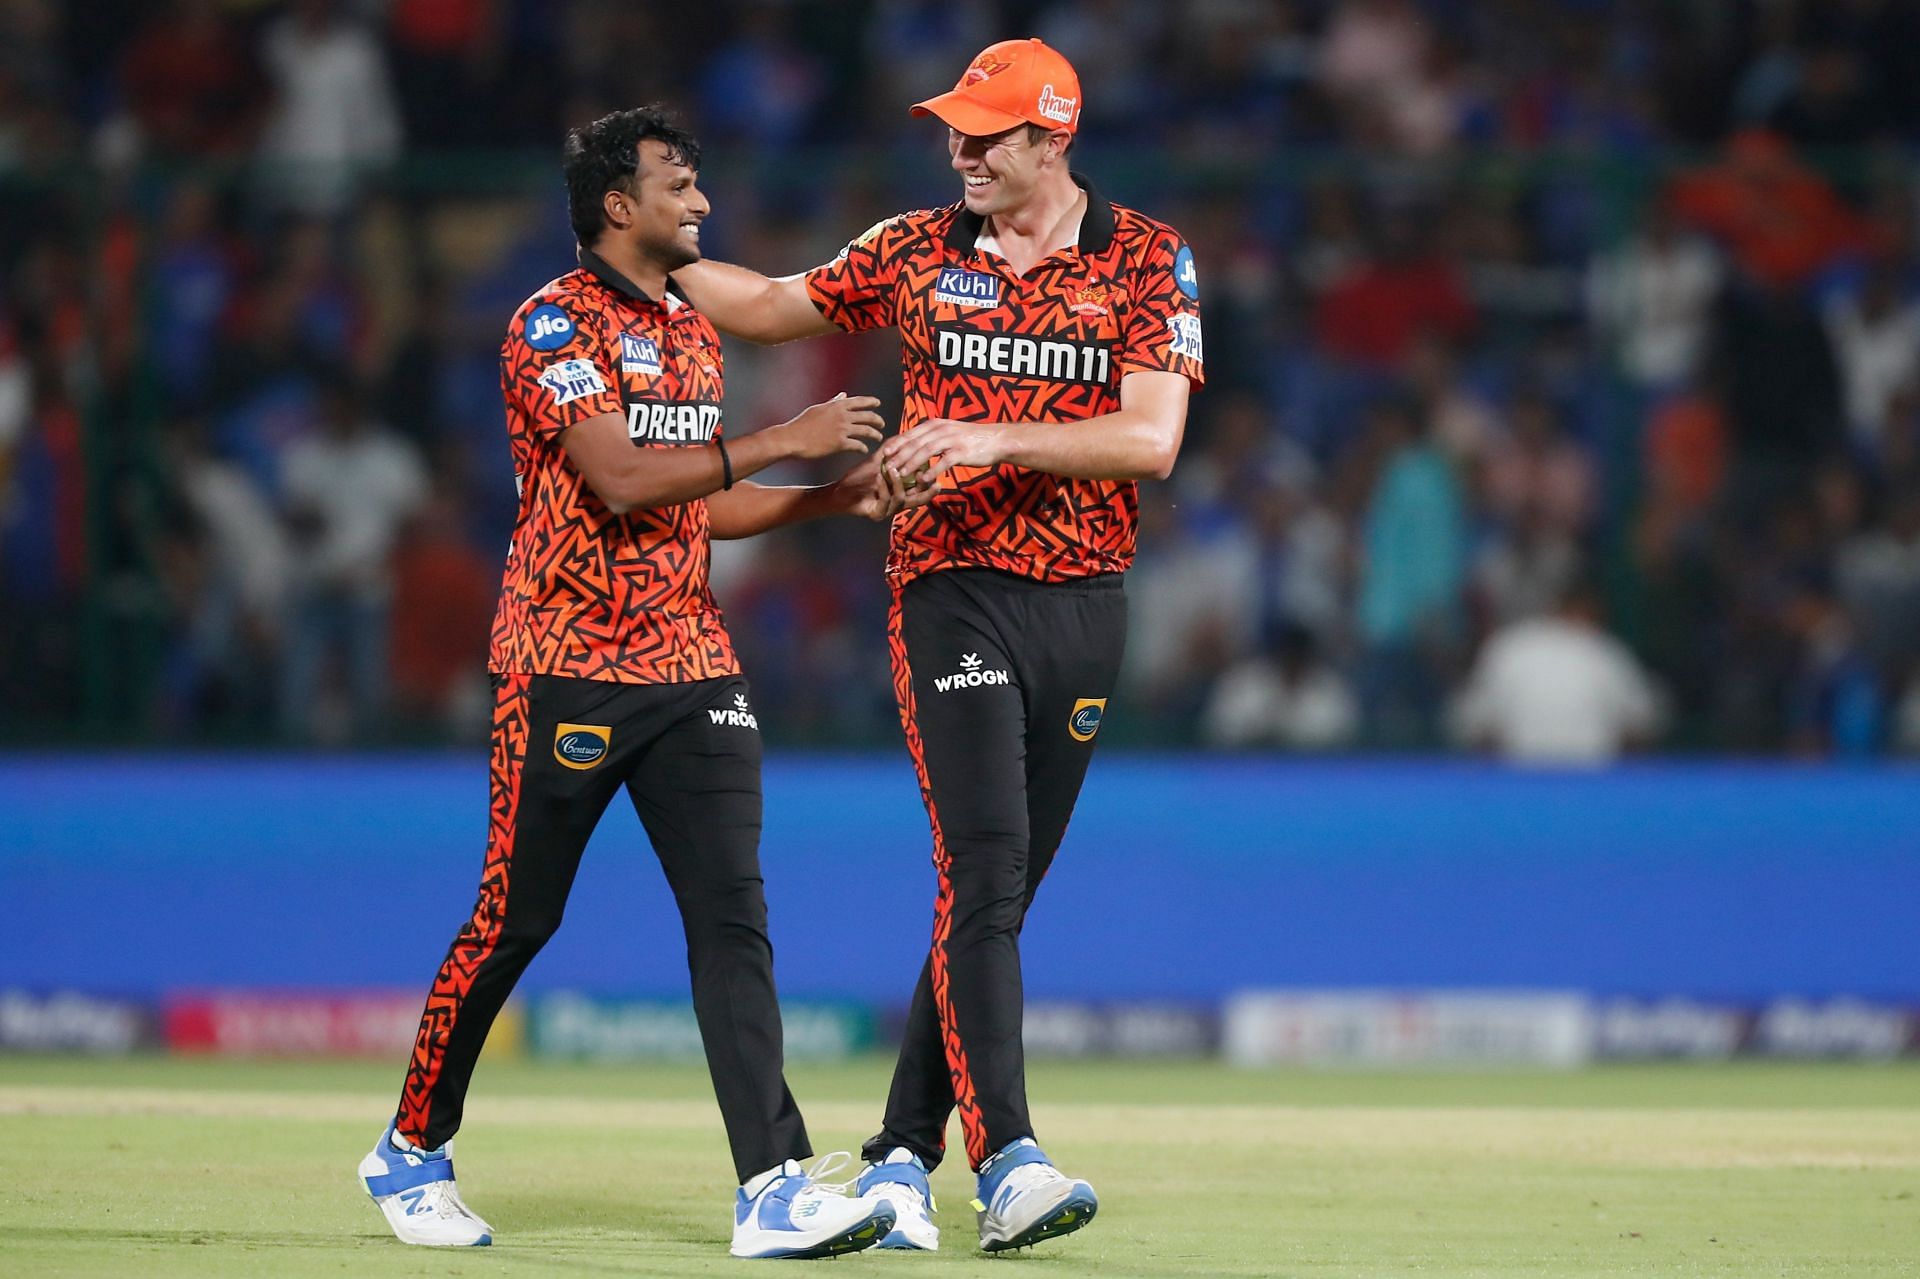 Pat Cummins and T Natarajan celebrate a wicket. (Credits: Twitter)